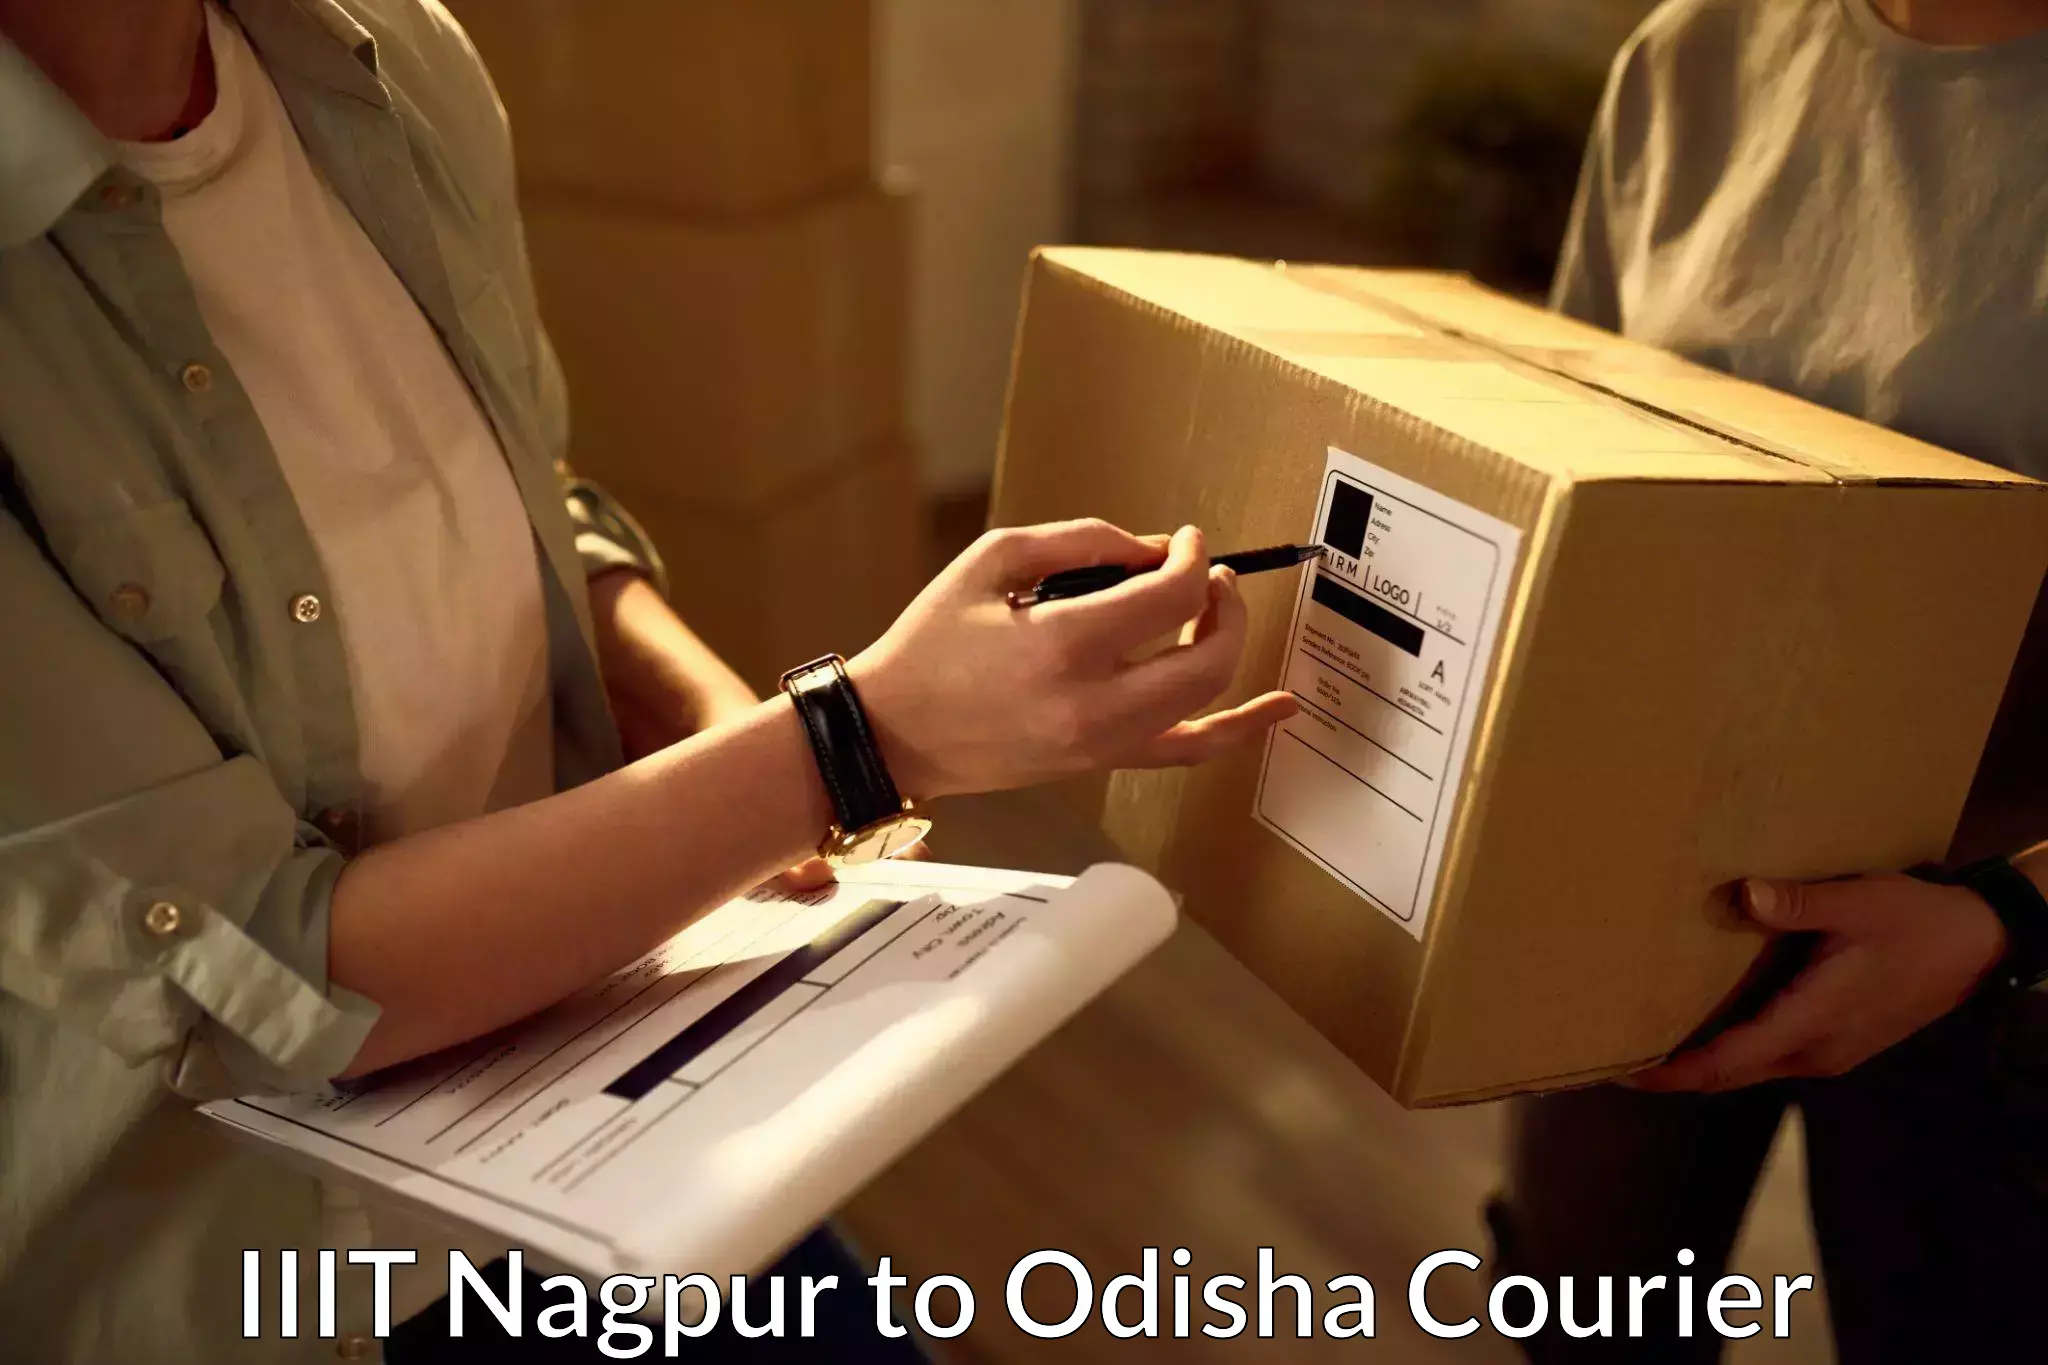 Nationwide delivery network IIIT Nagpur to Odisha